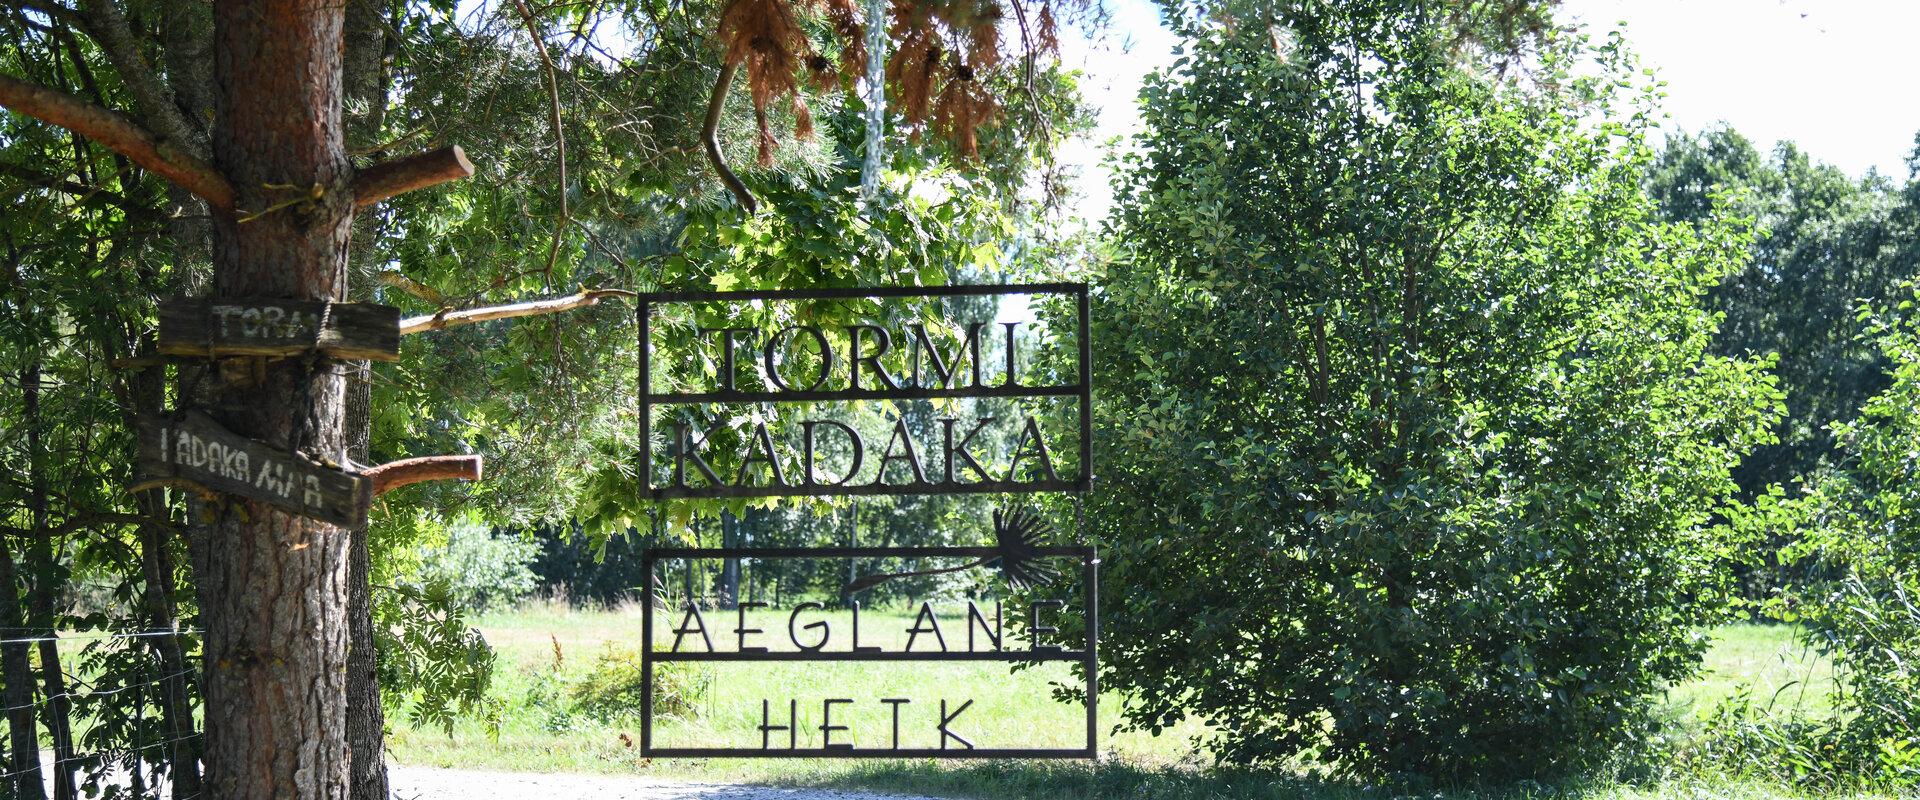 Signs directing to the Aeglane Hetk apiary and Tormikadaka Farm